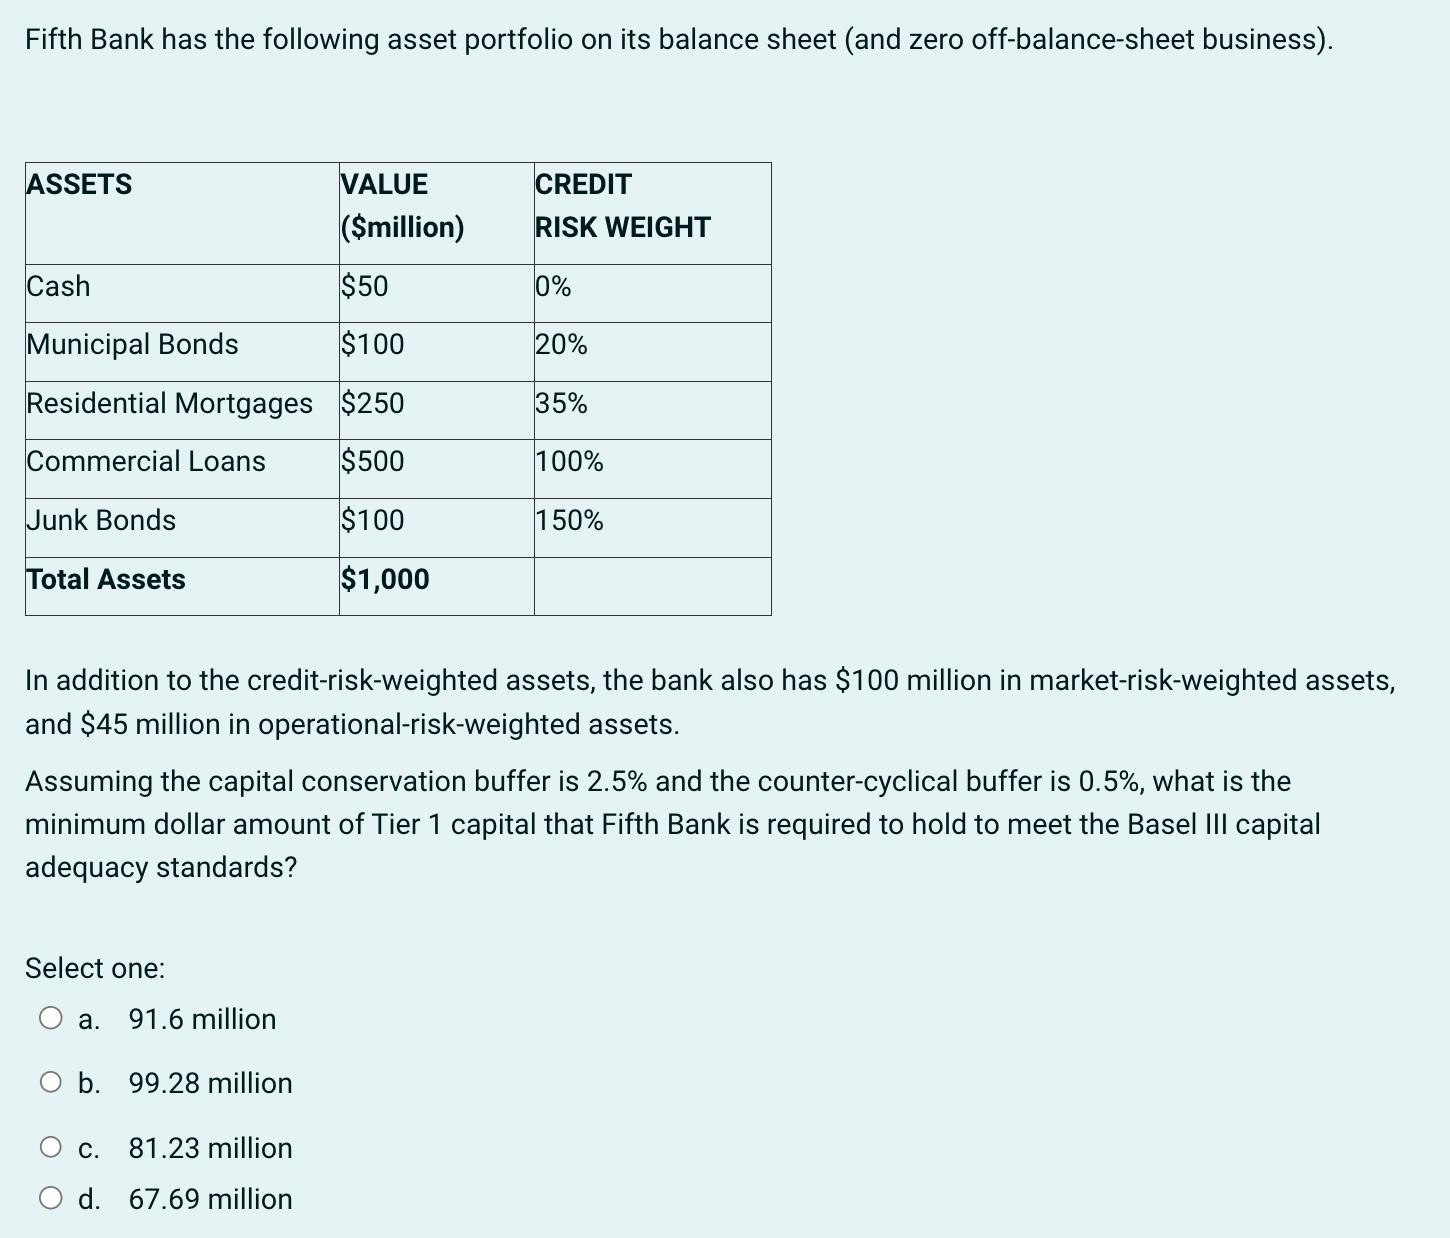 Fifth Bank has the following asset portfolio on its balance sheet (and zero off-balance-sheet business).